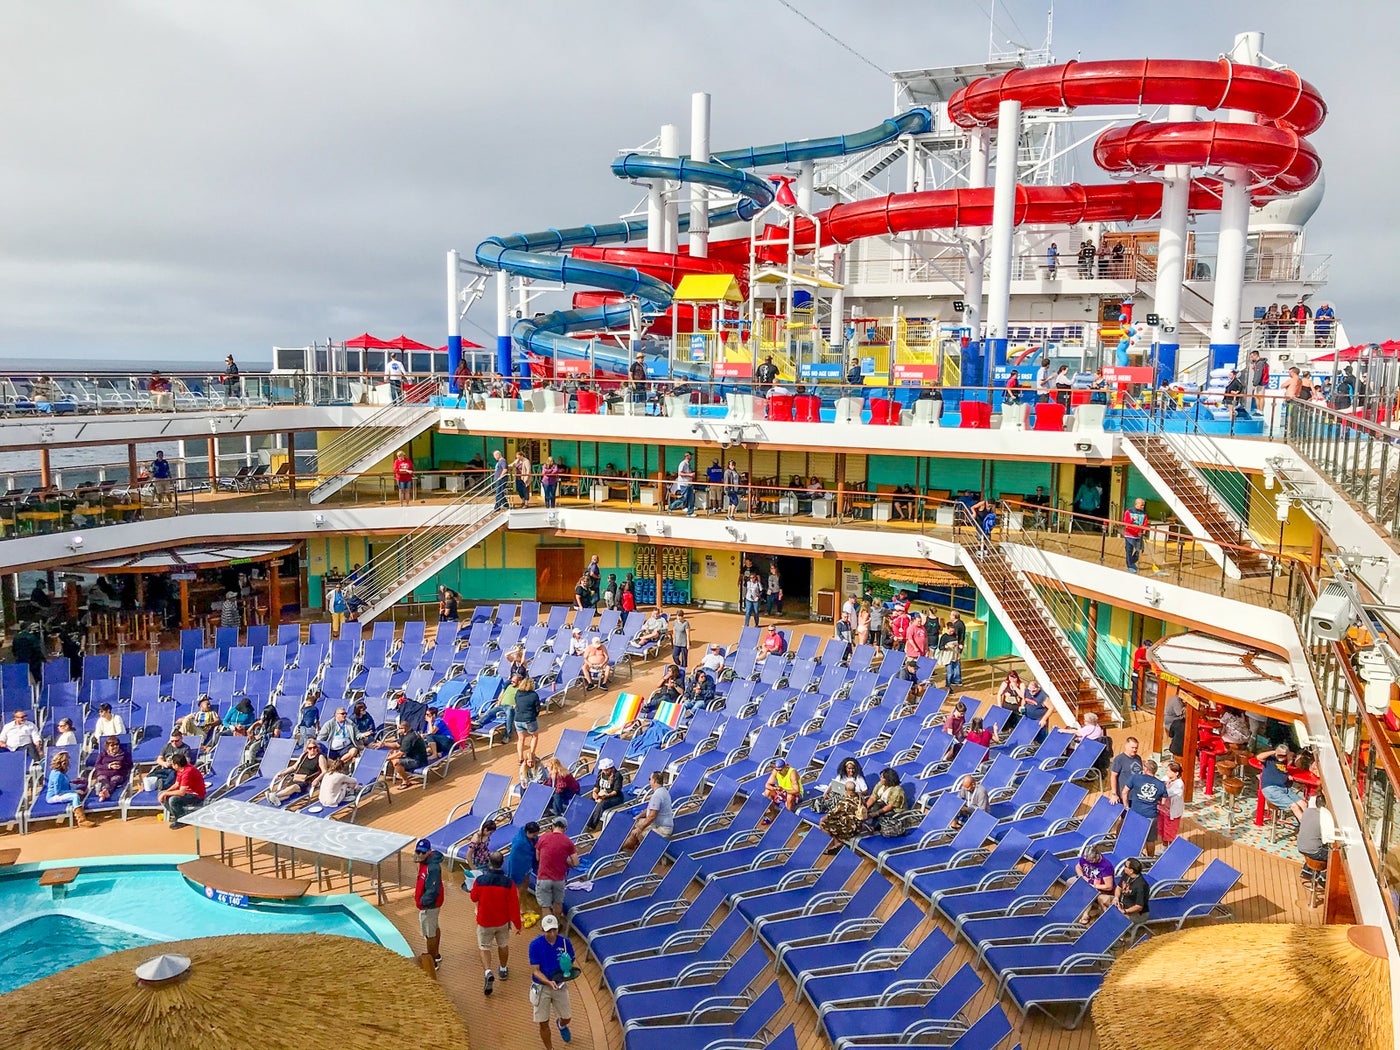 carnival cruise ships destinations